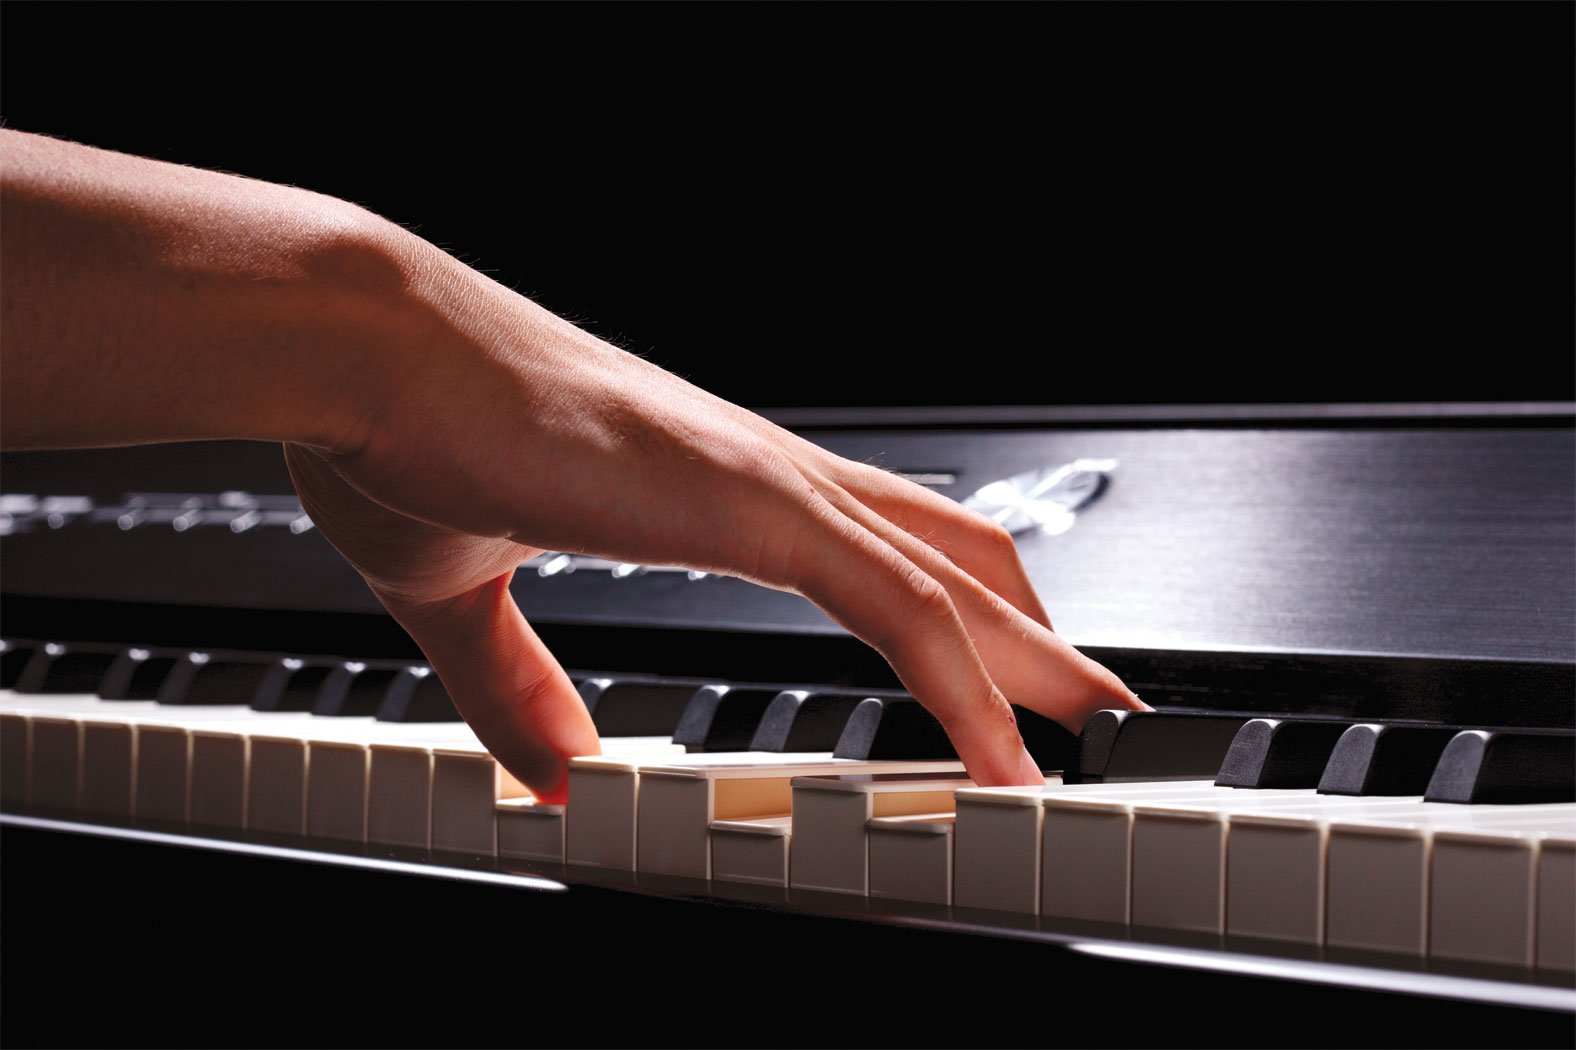 Музыка игра на фортепиано. Руки на клавишах пианино. Фортепьяно. Руки пианиста. Игра на пианино.